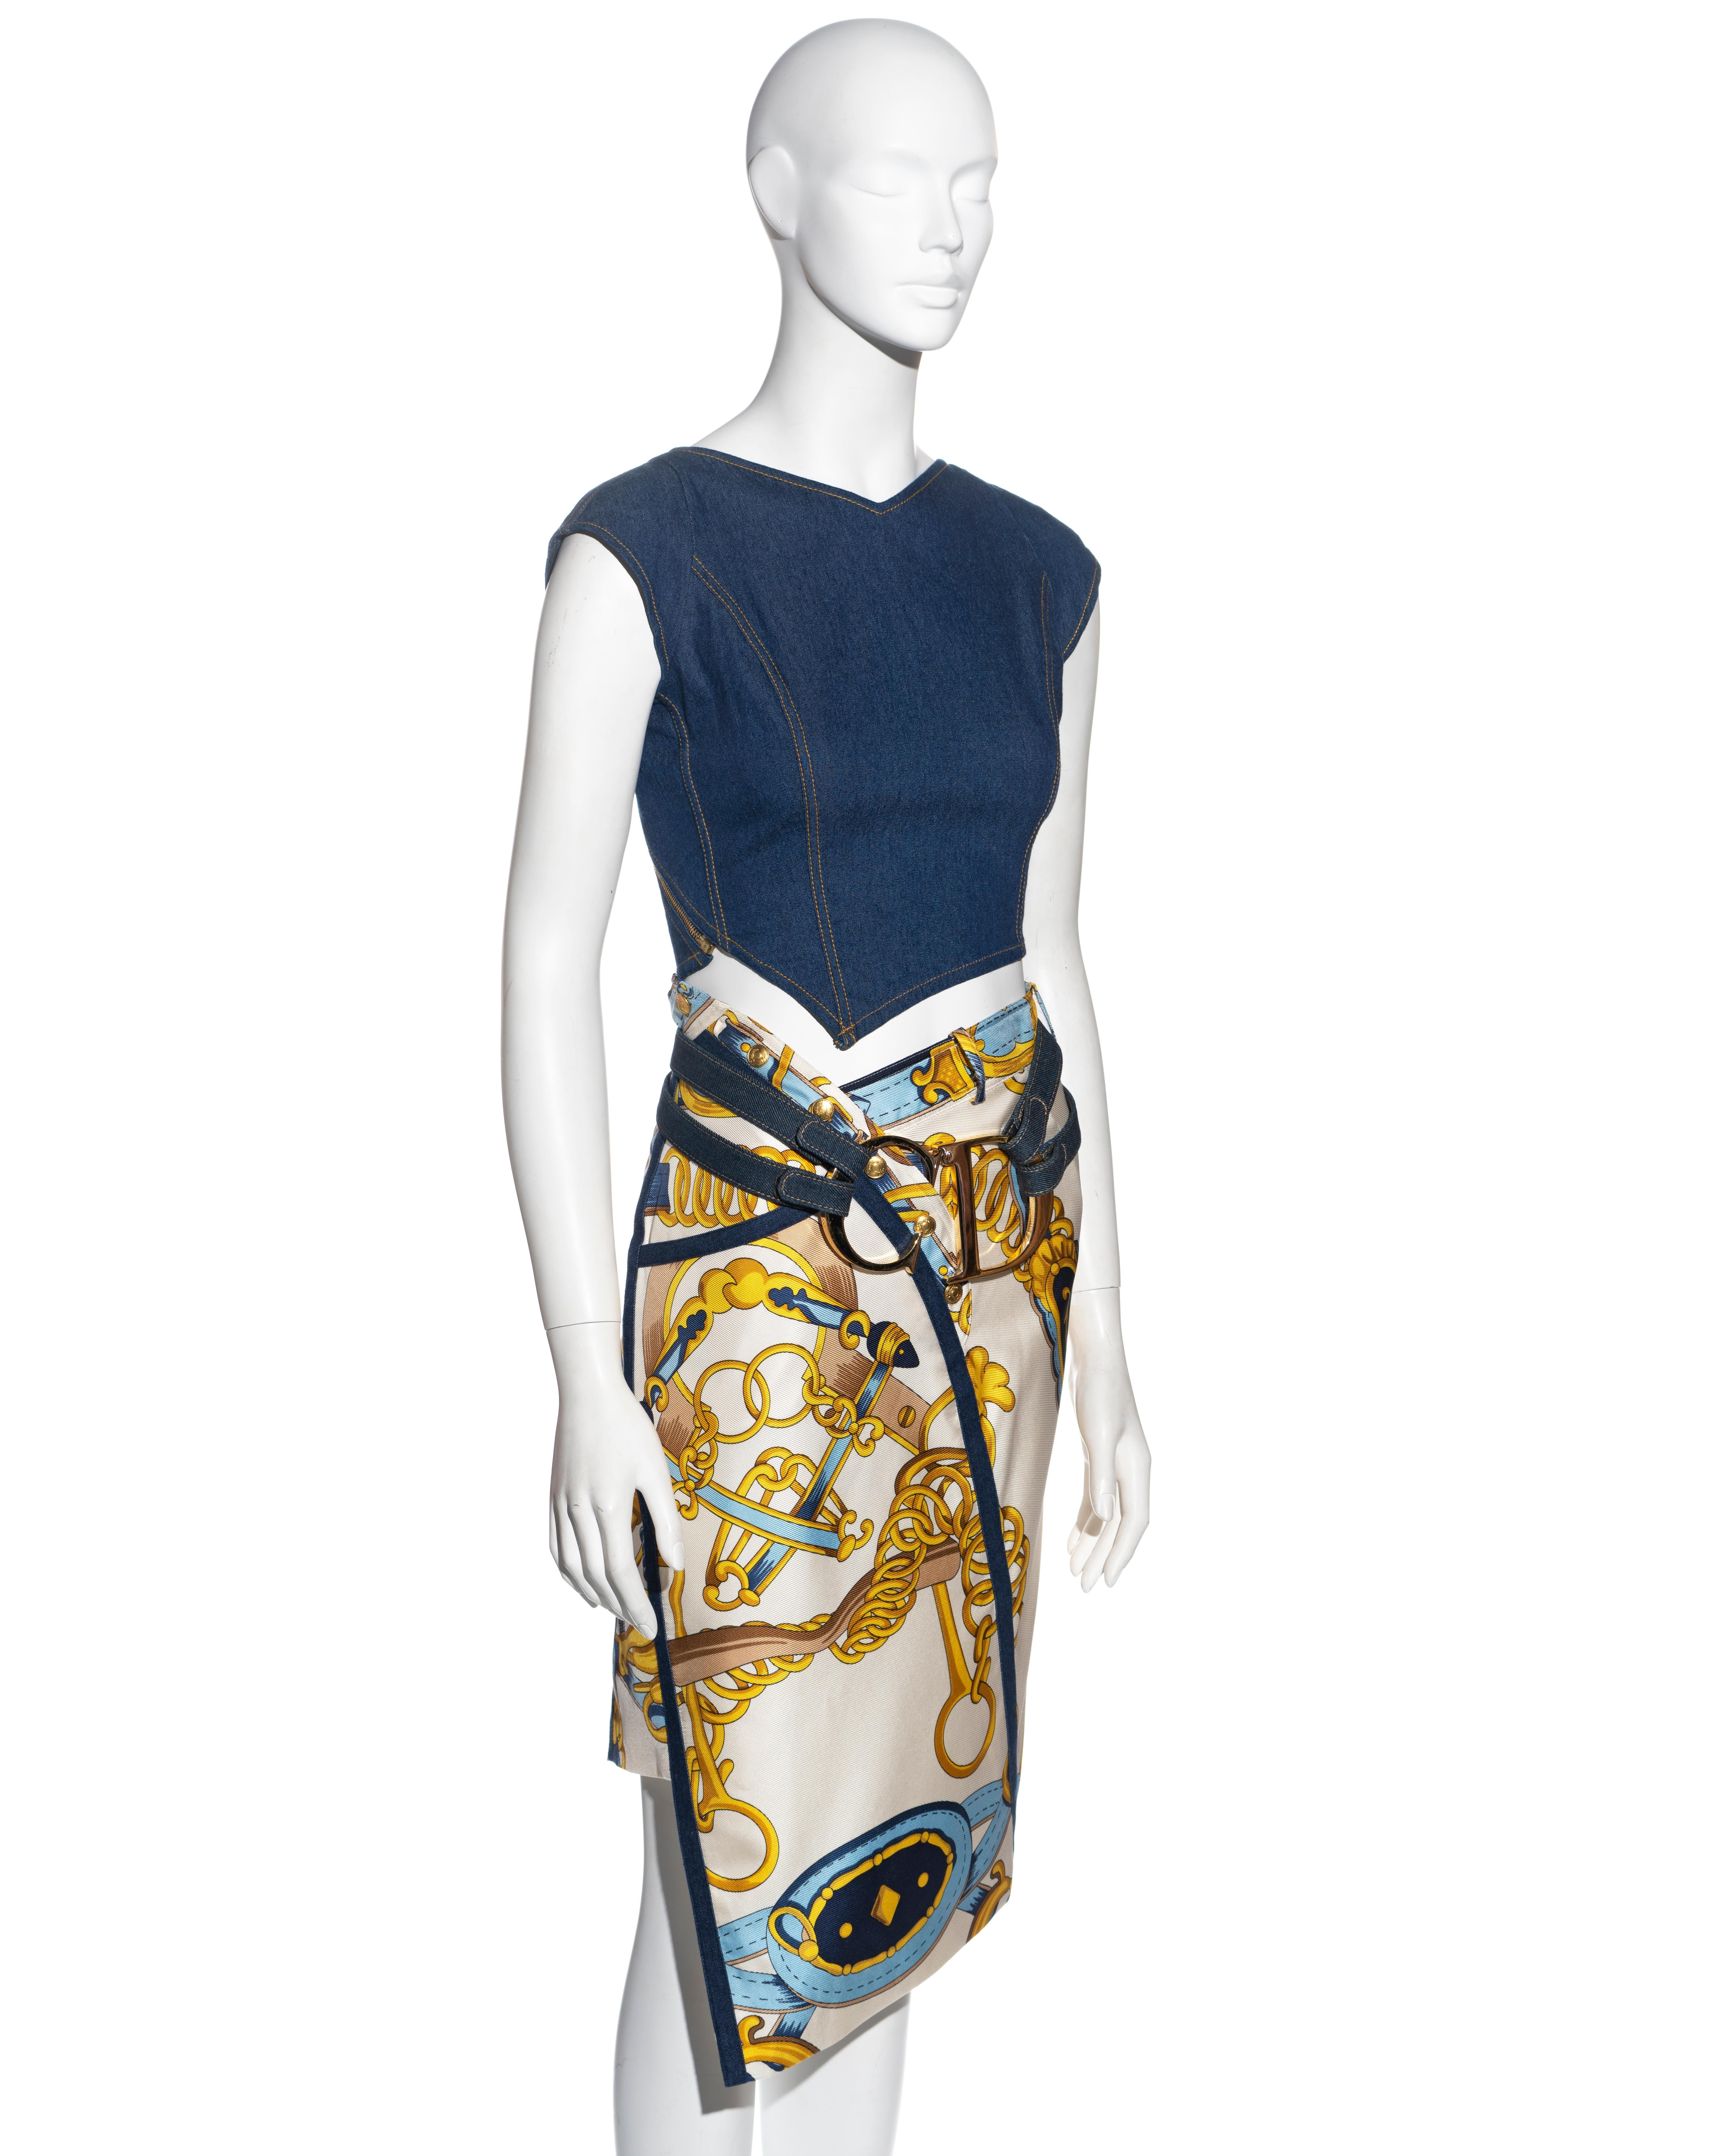 Christian Dior by John Galliano skirt, top and belt ensemble, ss 2000 1